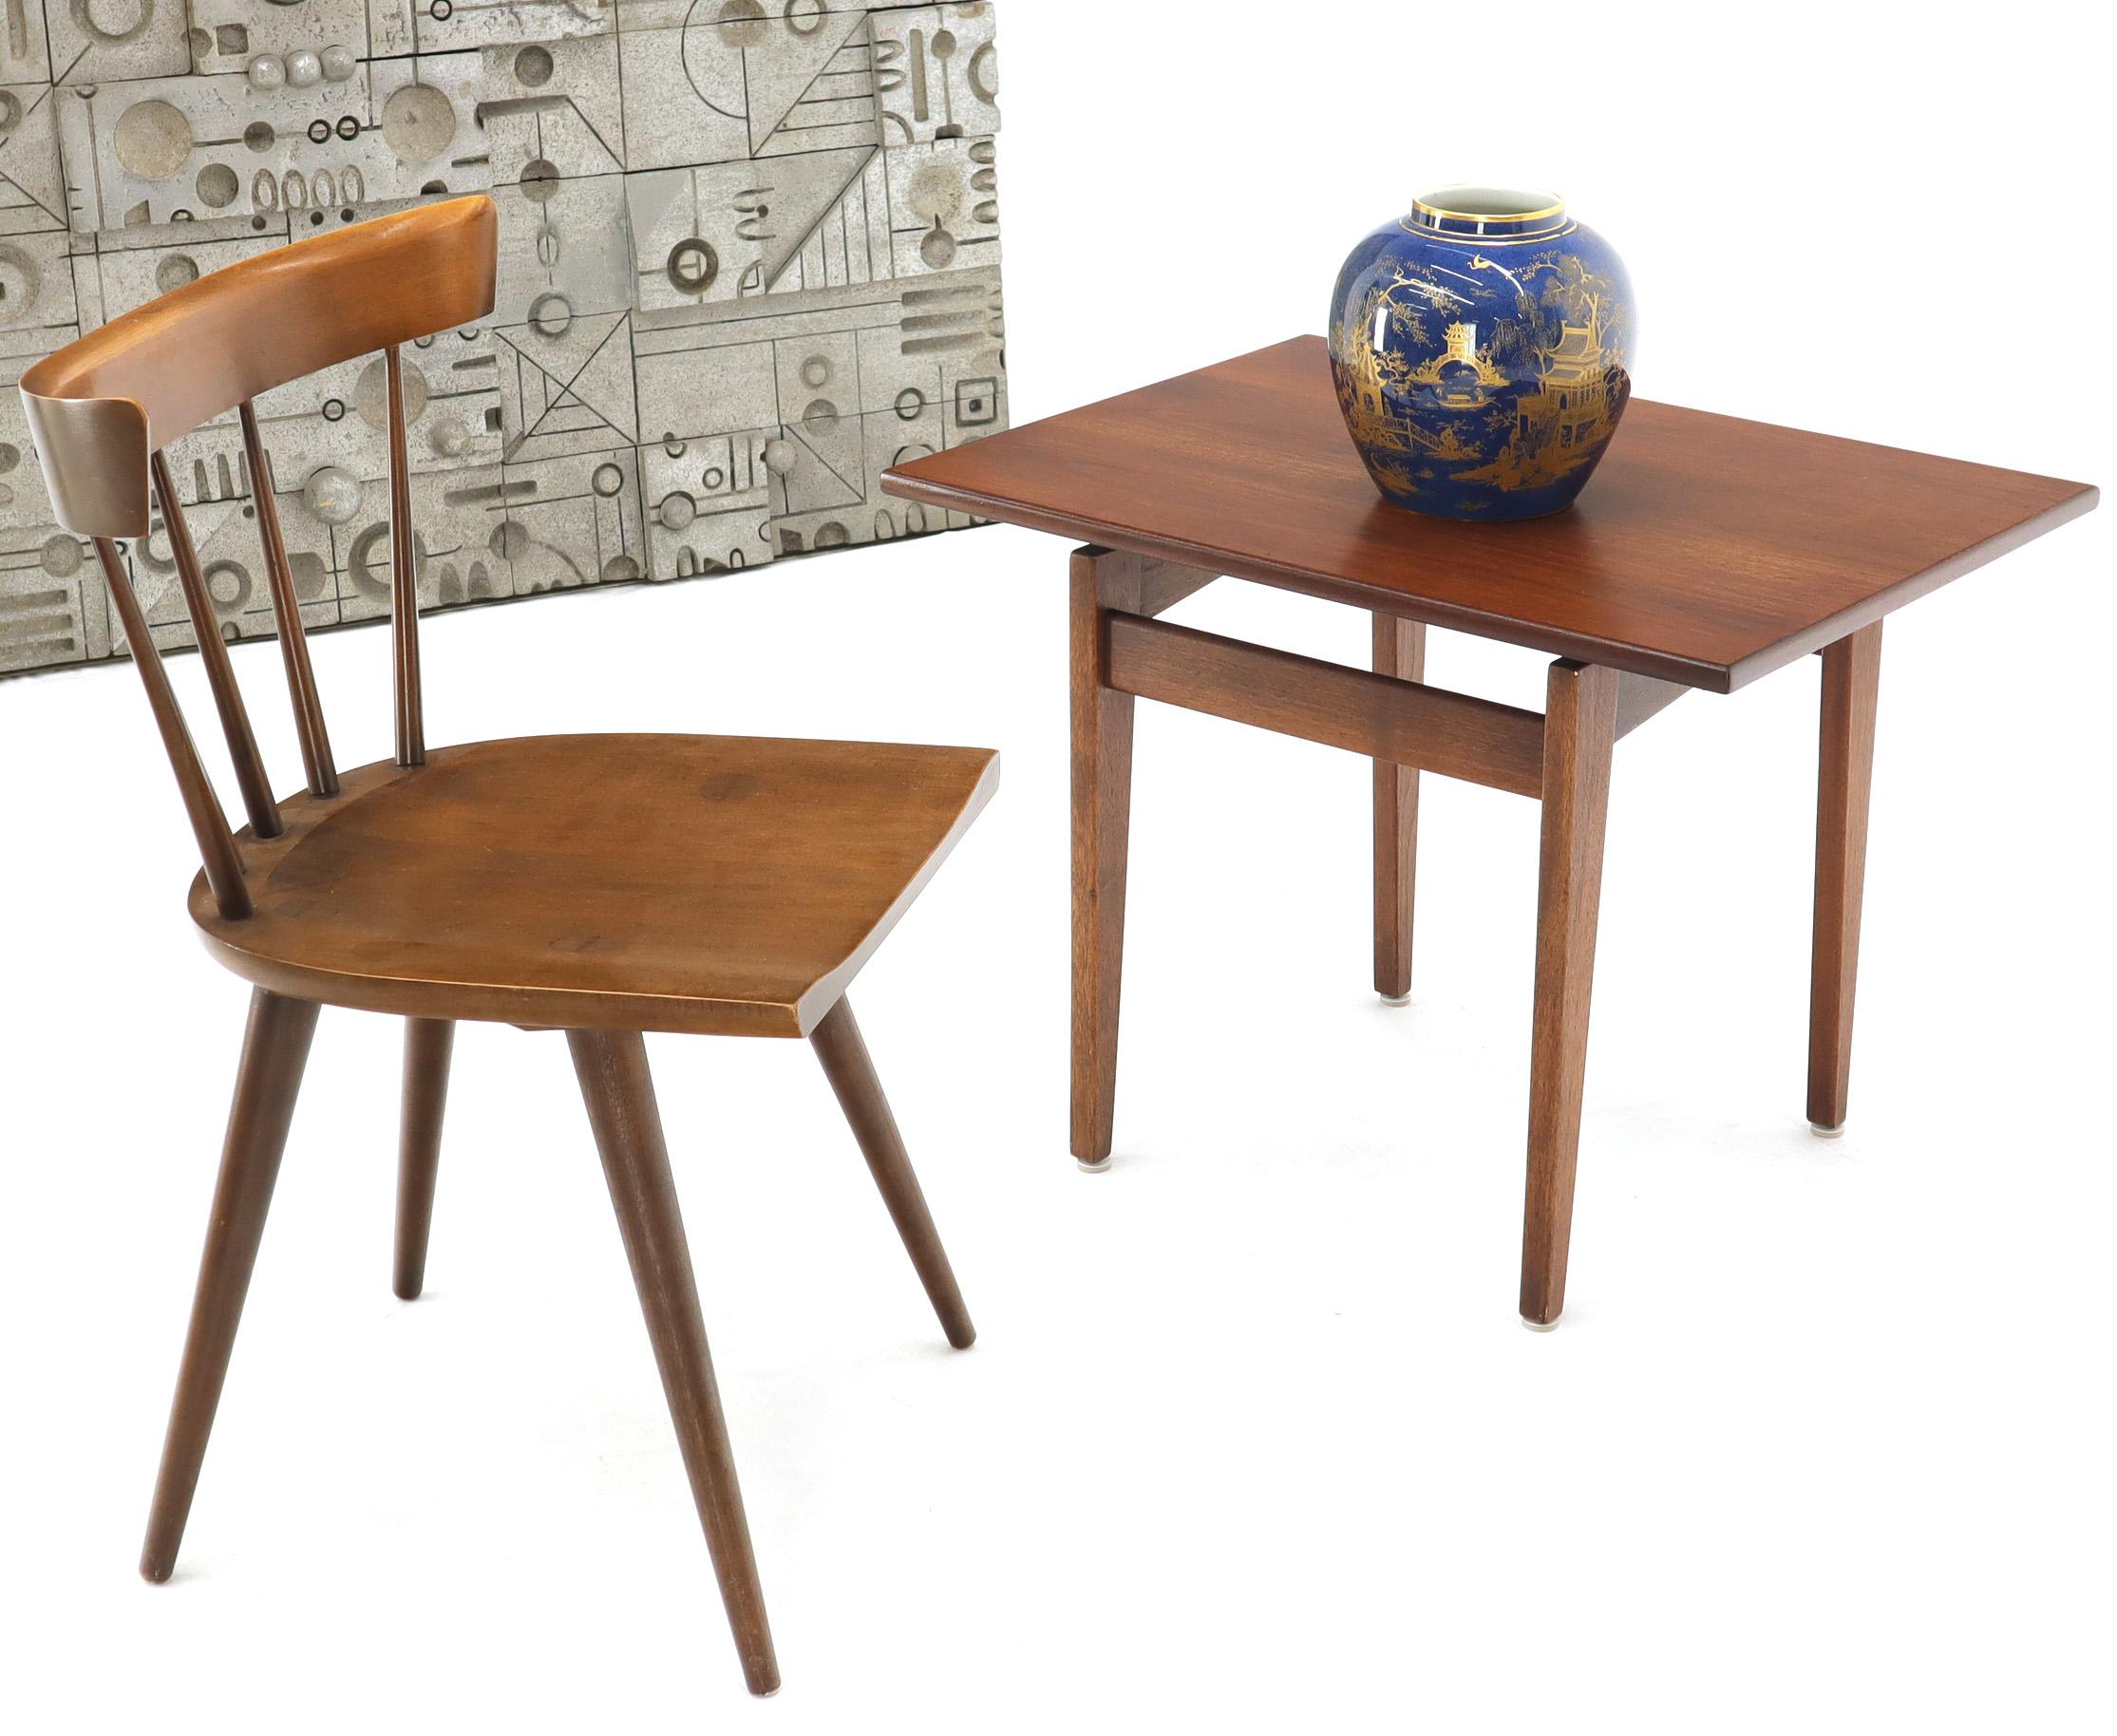 Mid-Century Modern oiled walnut side table by Jens Risom. Tapered solid walnut legs construction. Oiled walnut finish.